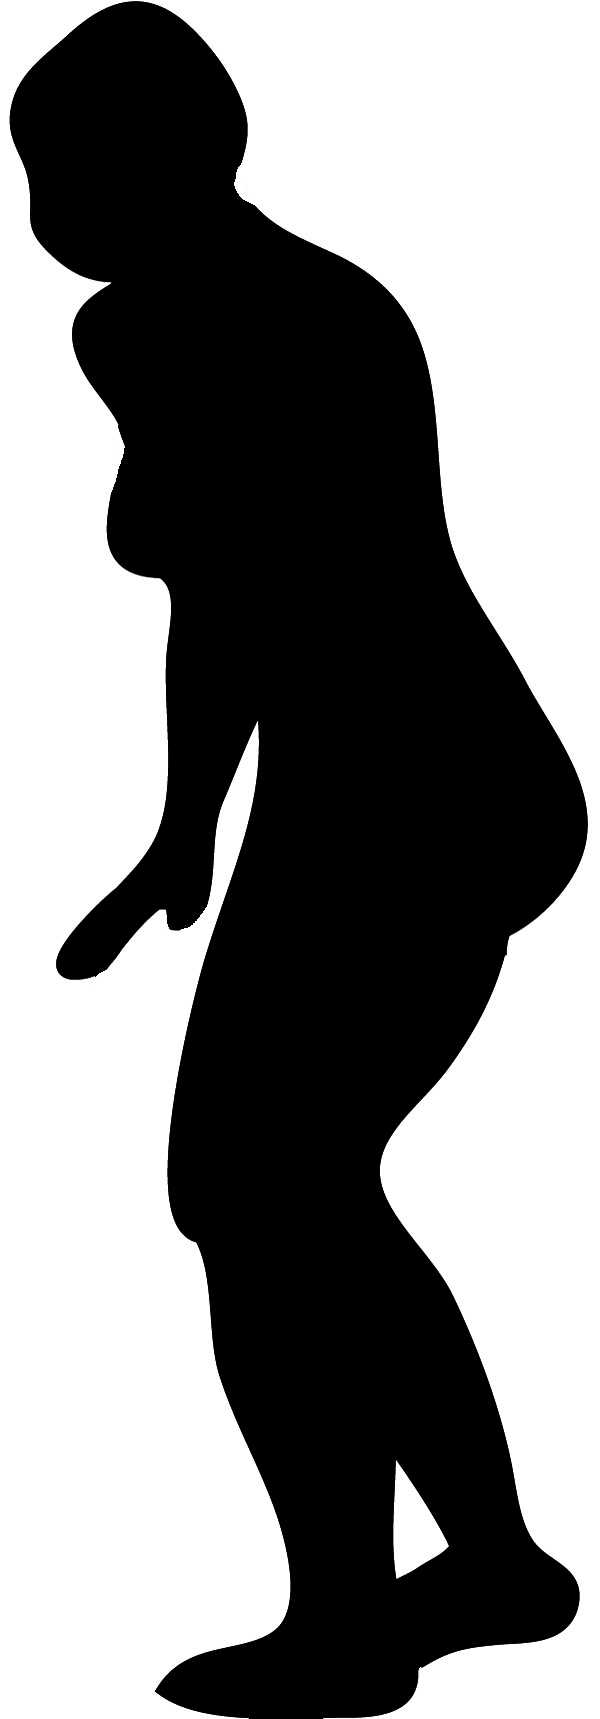 body silhouette of woman in black